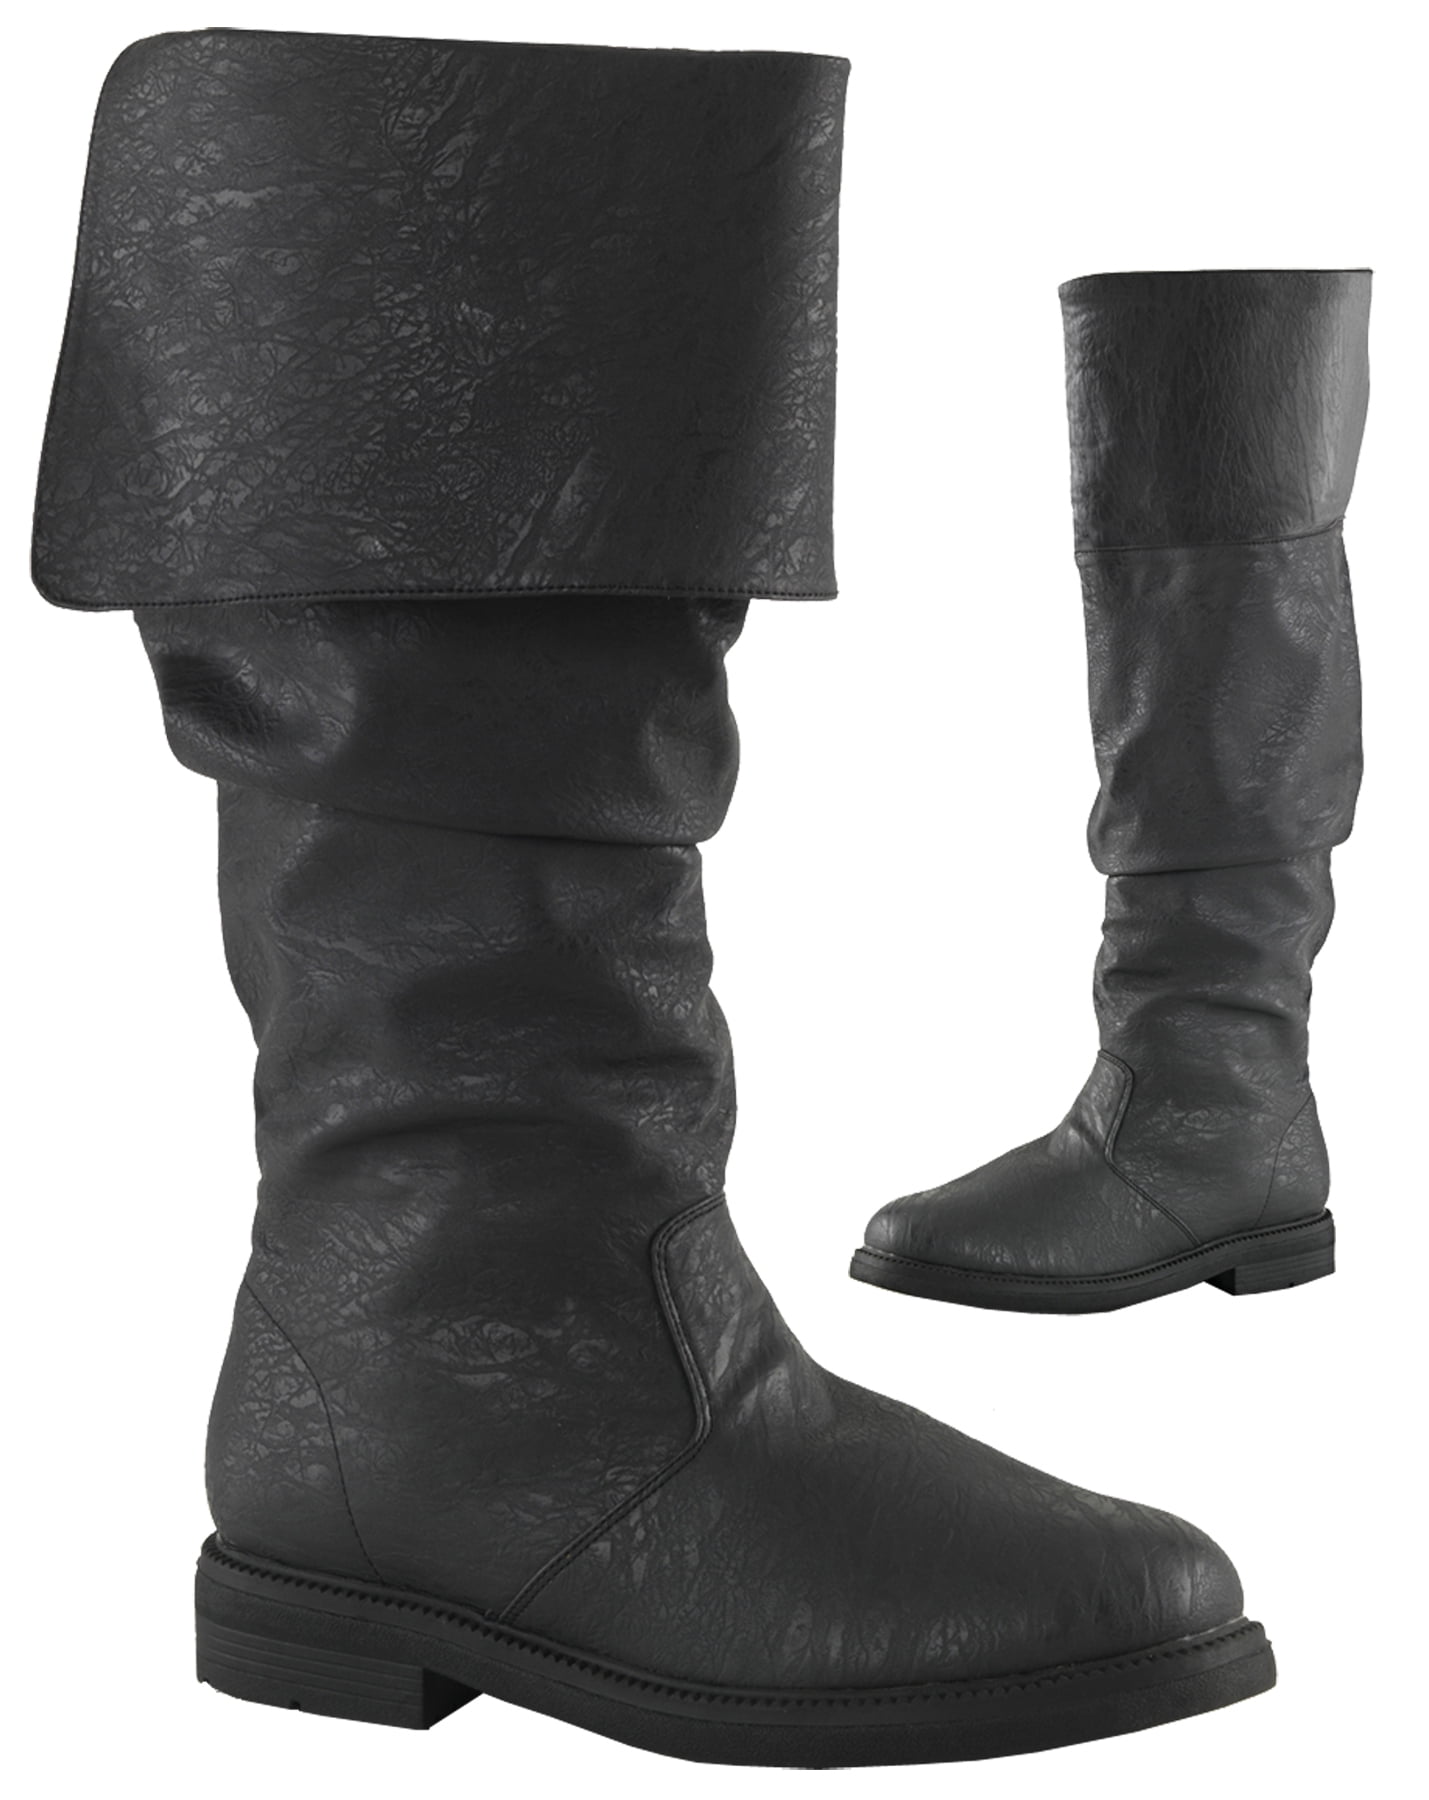 GOTHAM-109 MENS Renaissance Medieval Side Button Black Period Costume Knee Boots